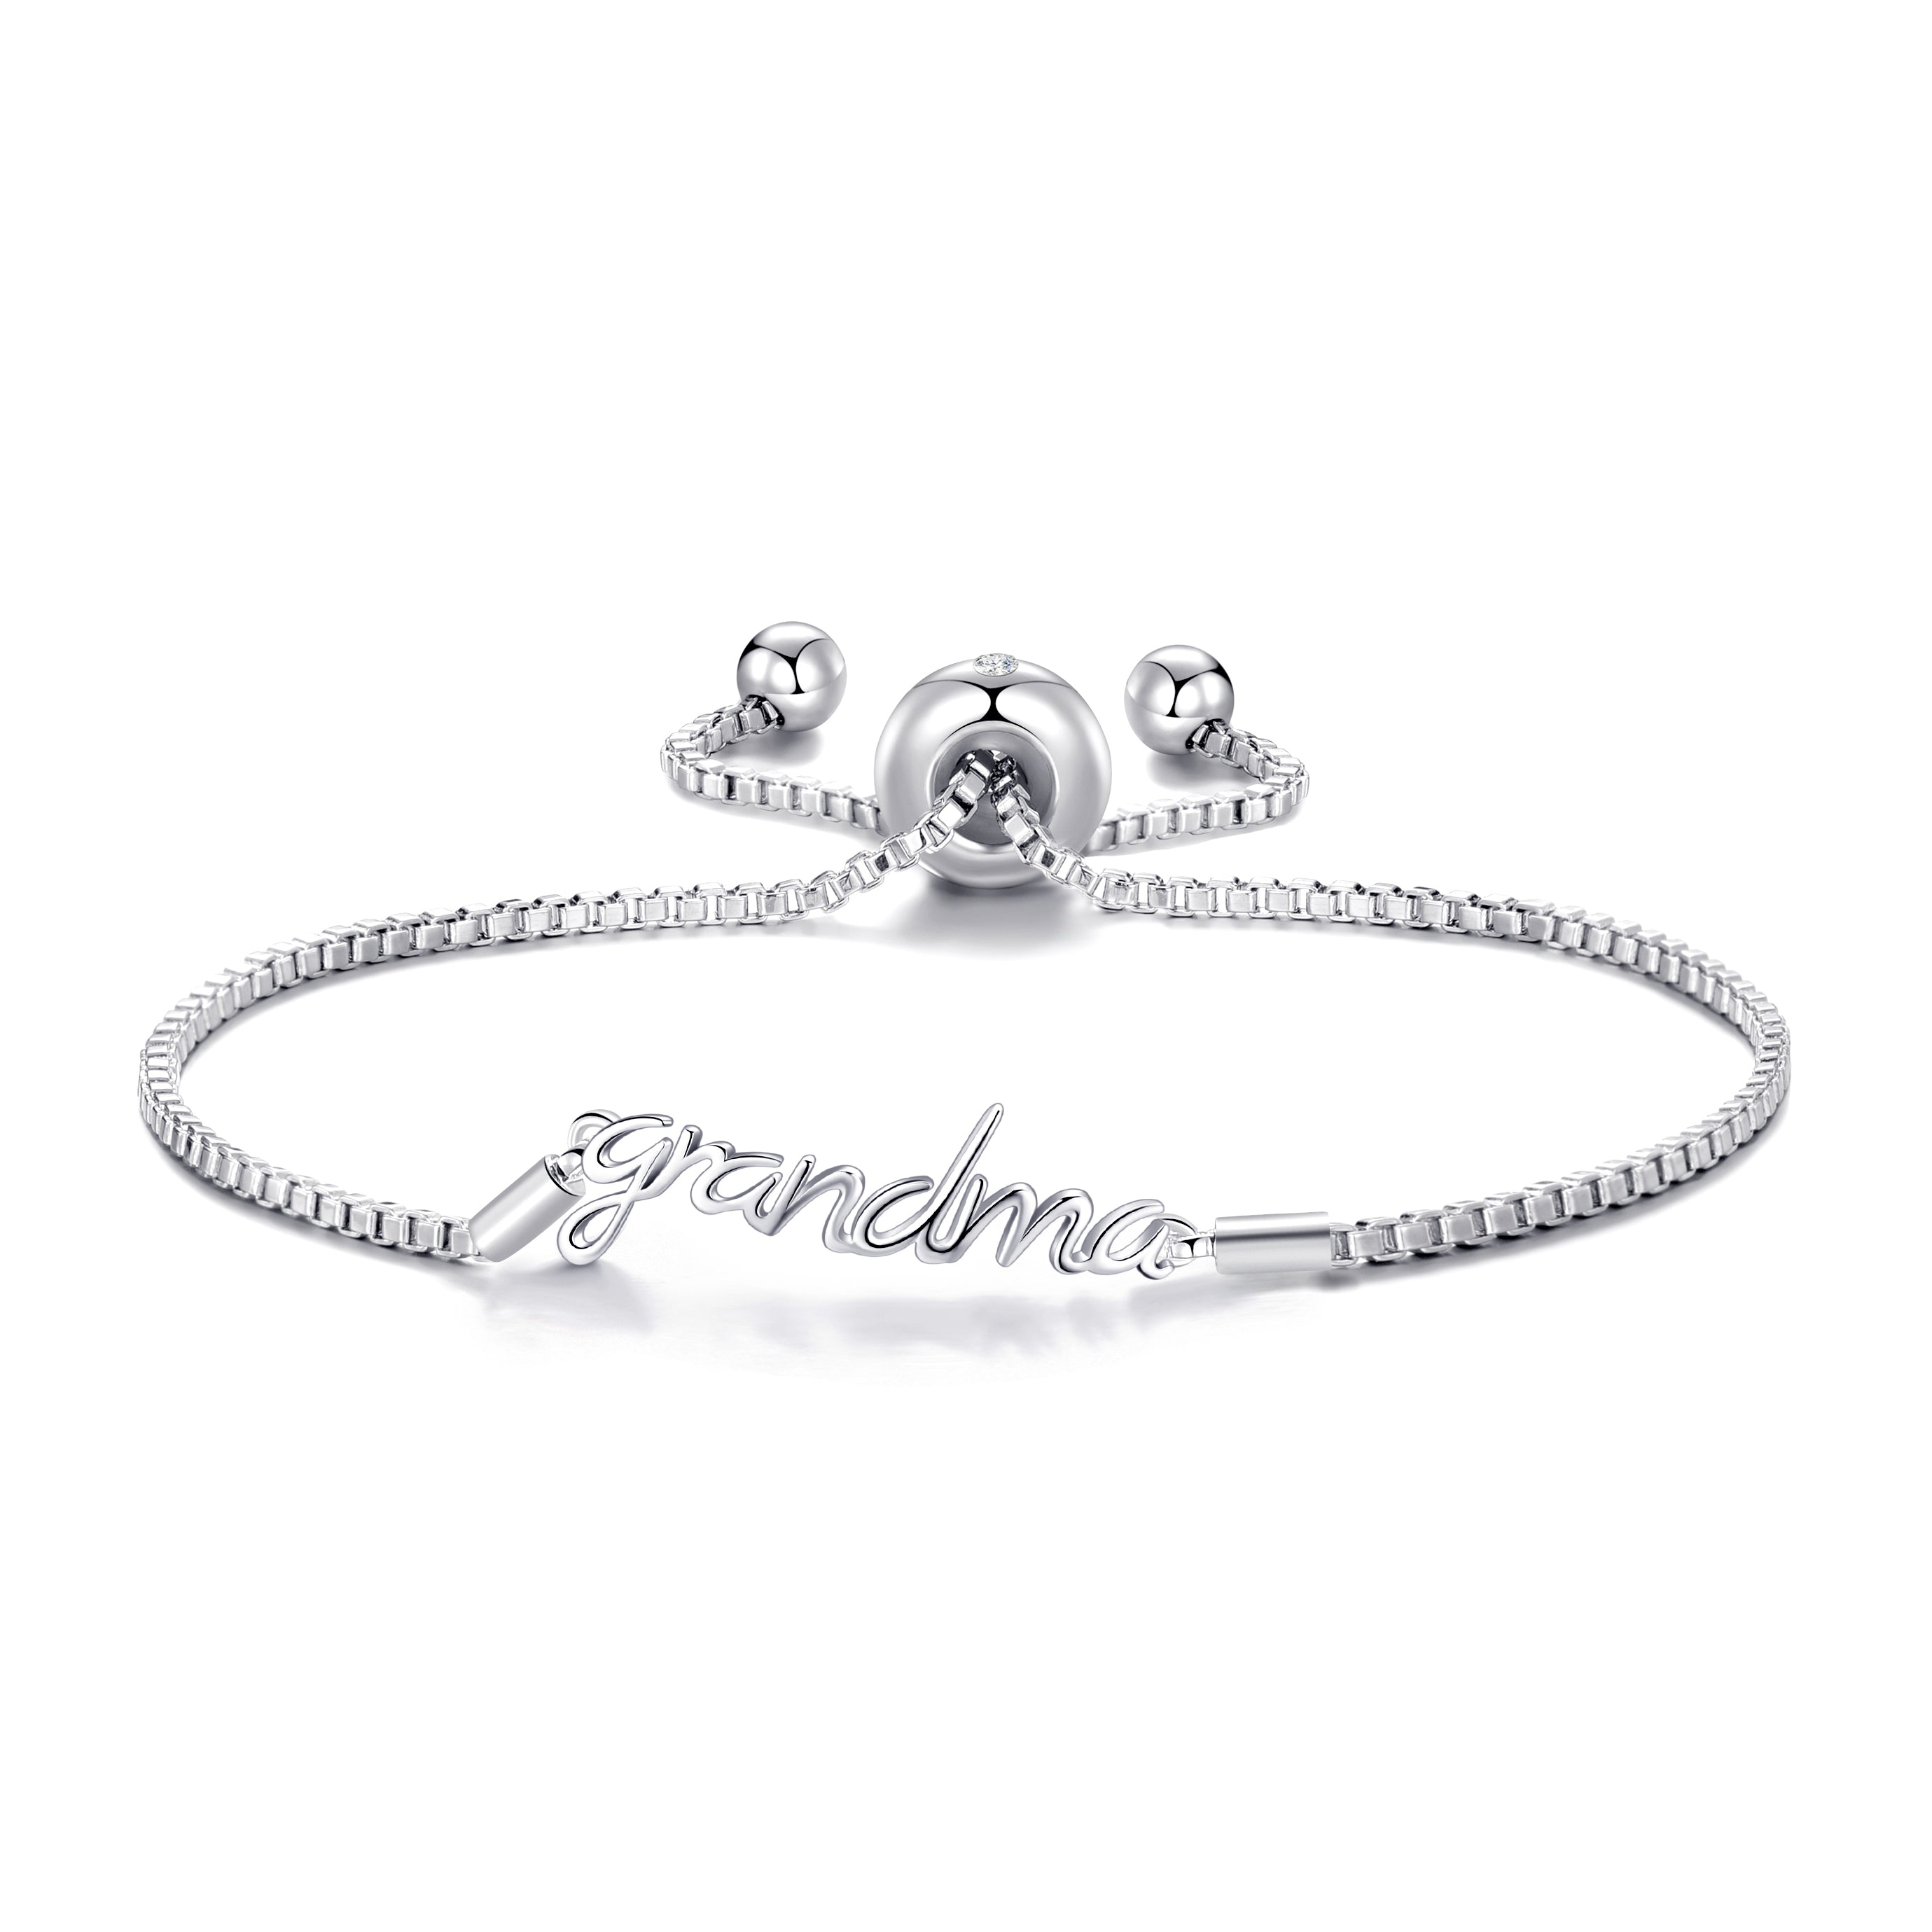 Silver Plated Grandma Bracelet Created with Zircondia® Crystals by Philip Jones Jewellery